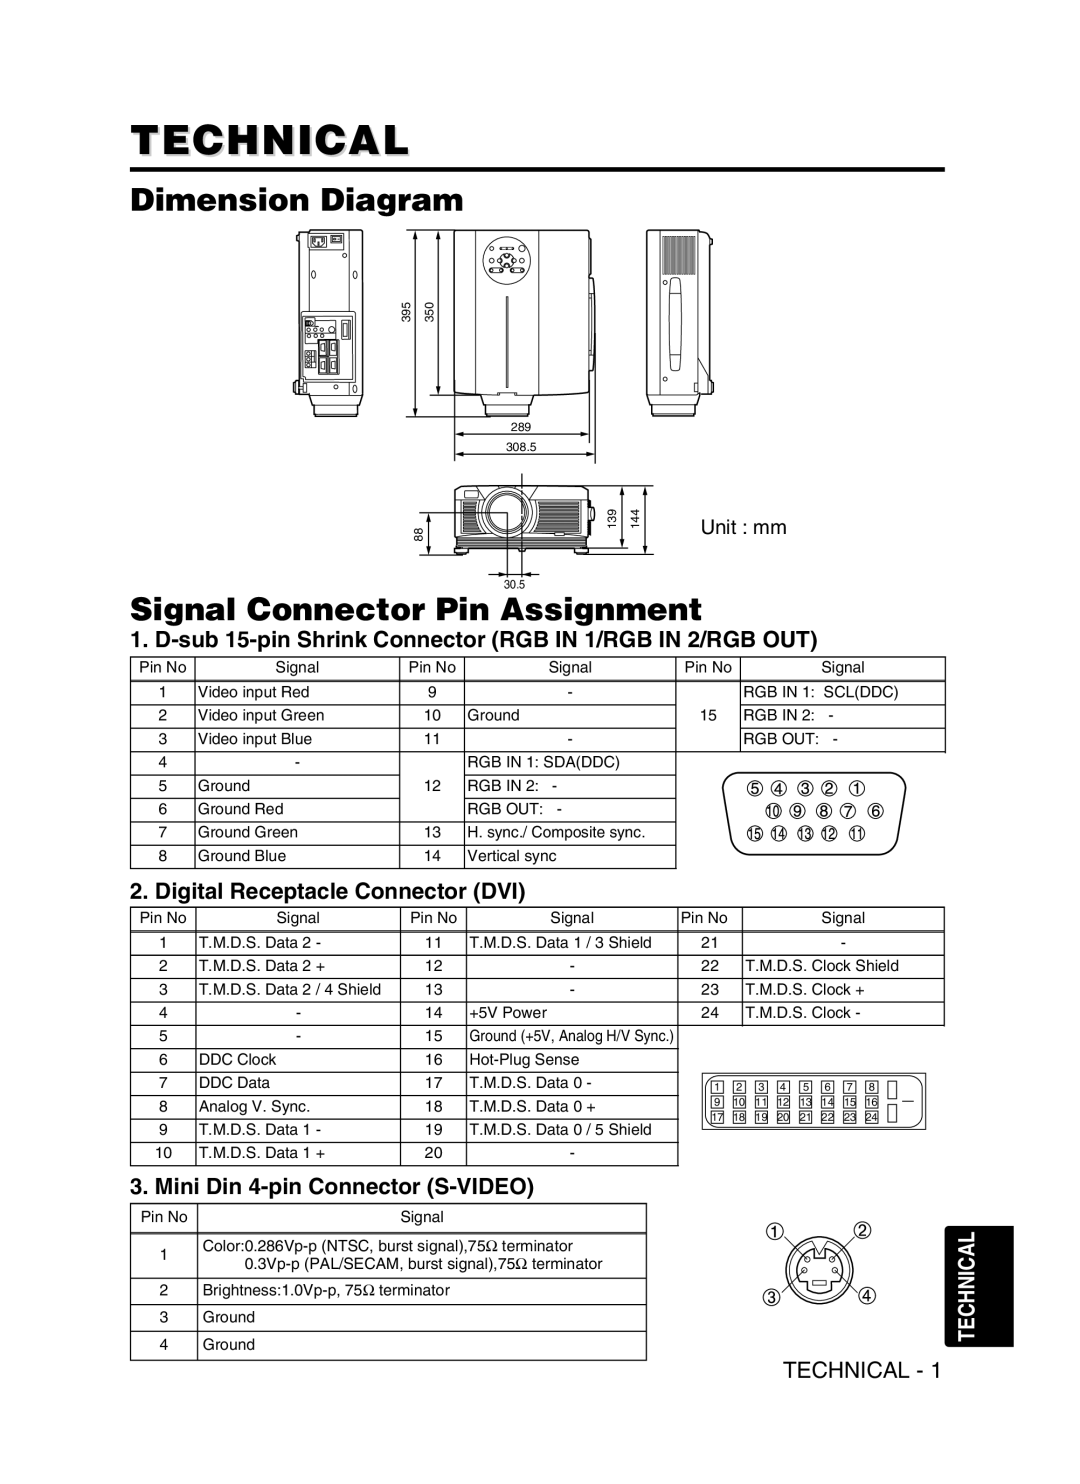 Proxima ASA DP6870 manual Technical, Dimension Diagram, Signal Connector Pin Assignment, Digital Receptacle Connector DVI 